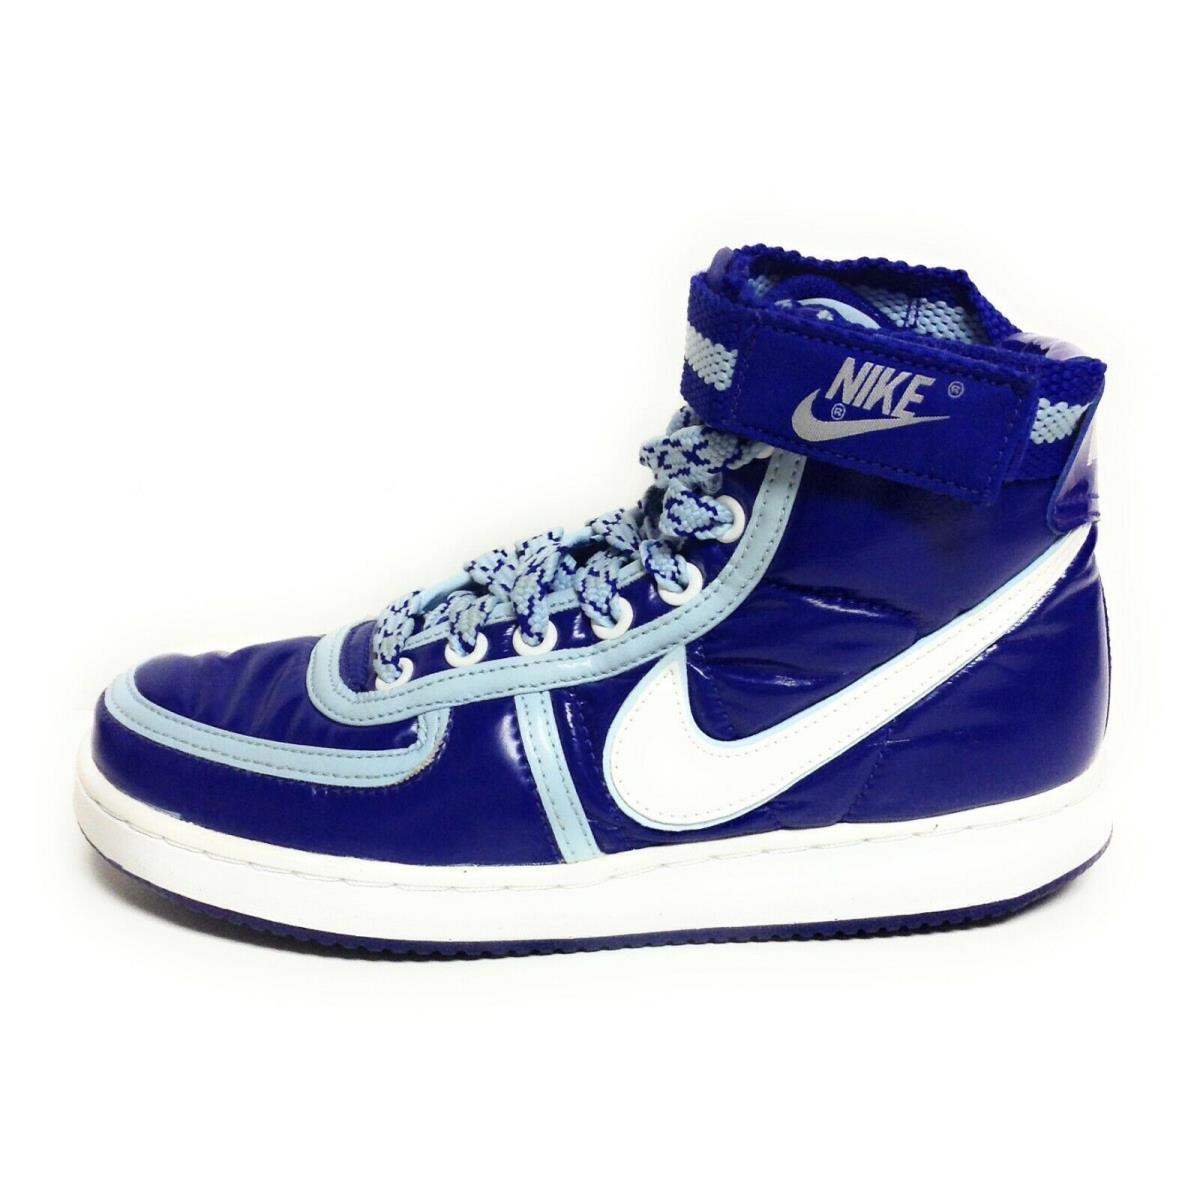 Womens Nike Vandal High 315057 411 Concord Purple 2008 Deadstock Sneakers Shoes - Purple